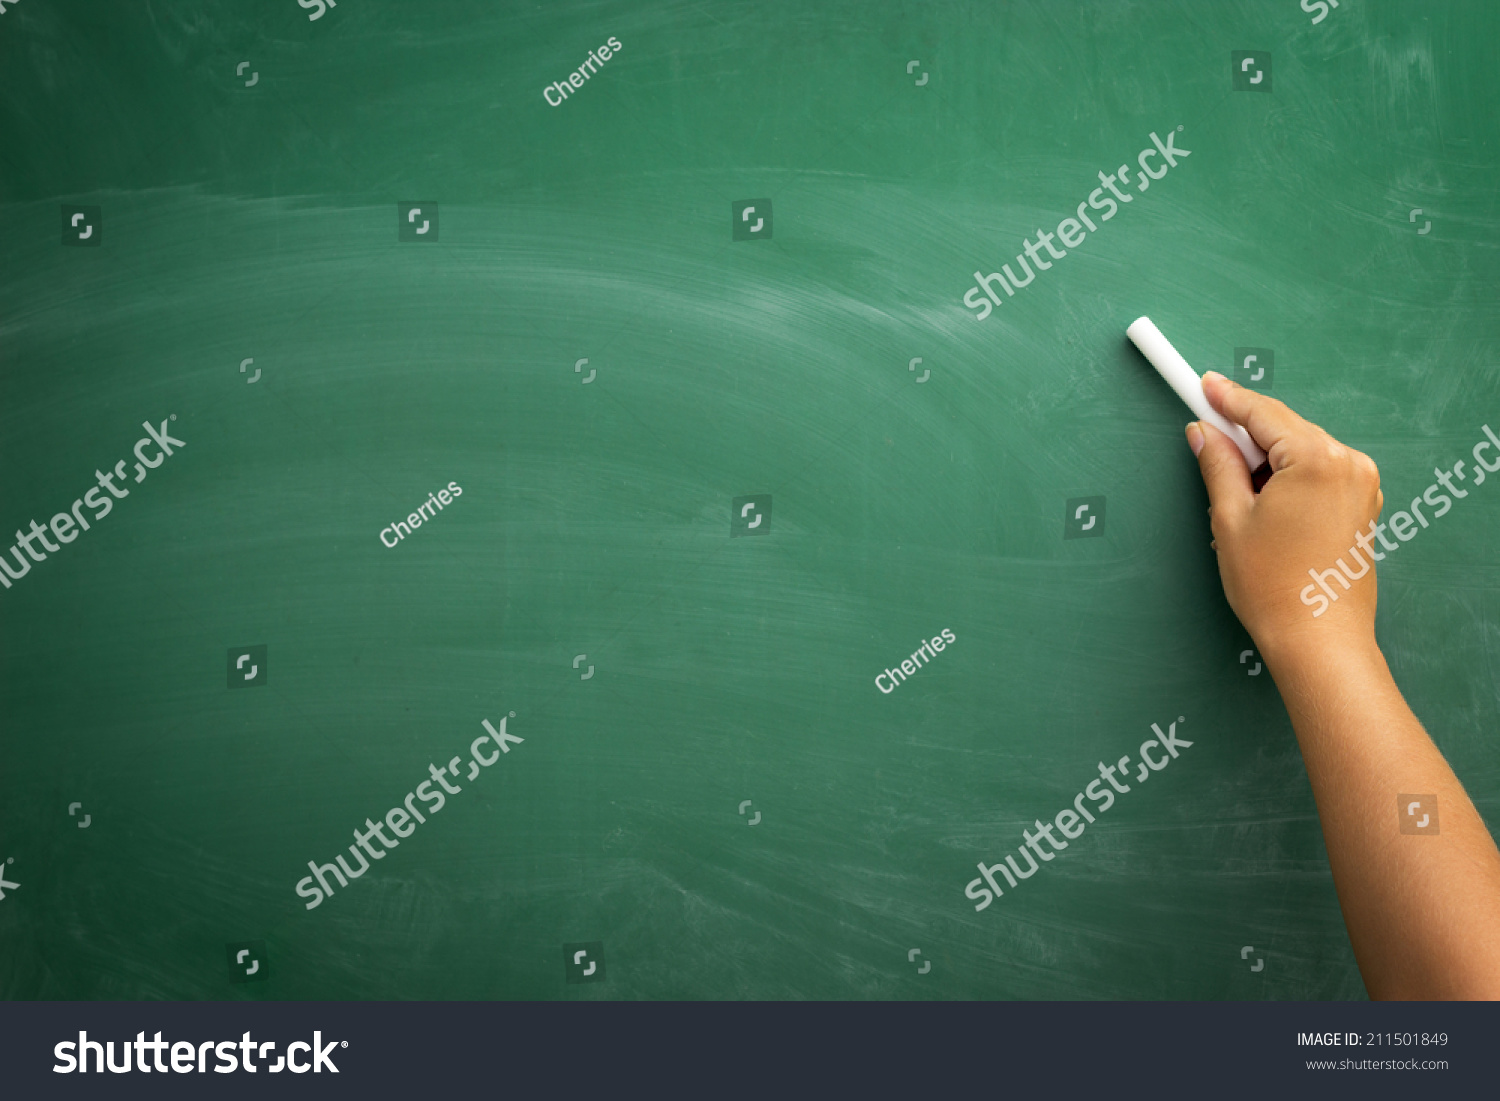 Blank blackboard / chalkboard, hand writing on green chalk board holding chalk, great texture for text #211501849